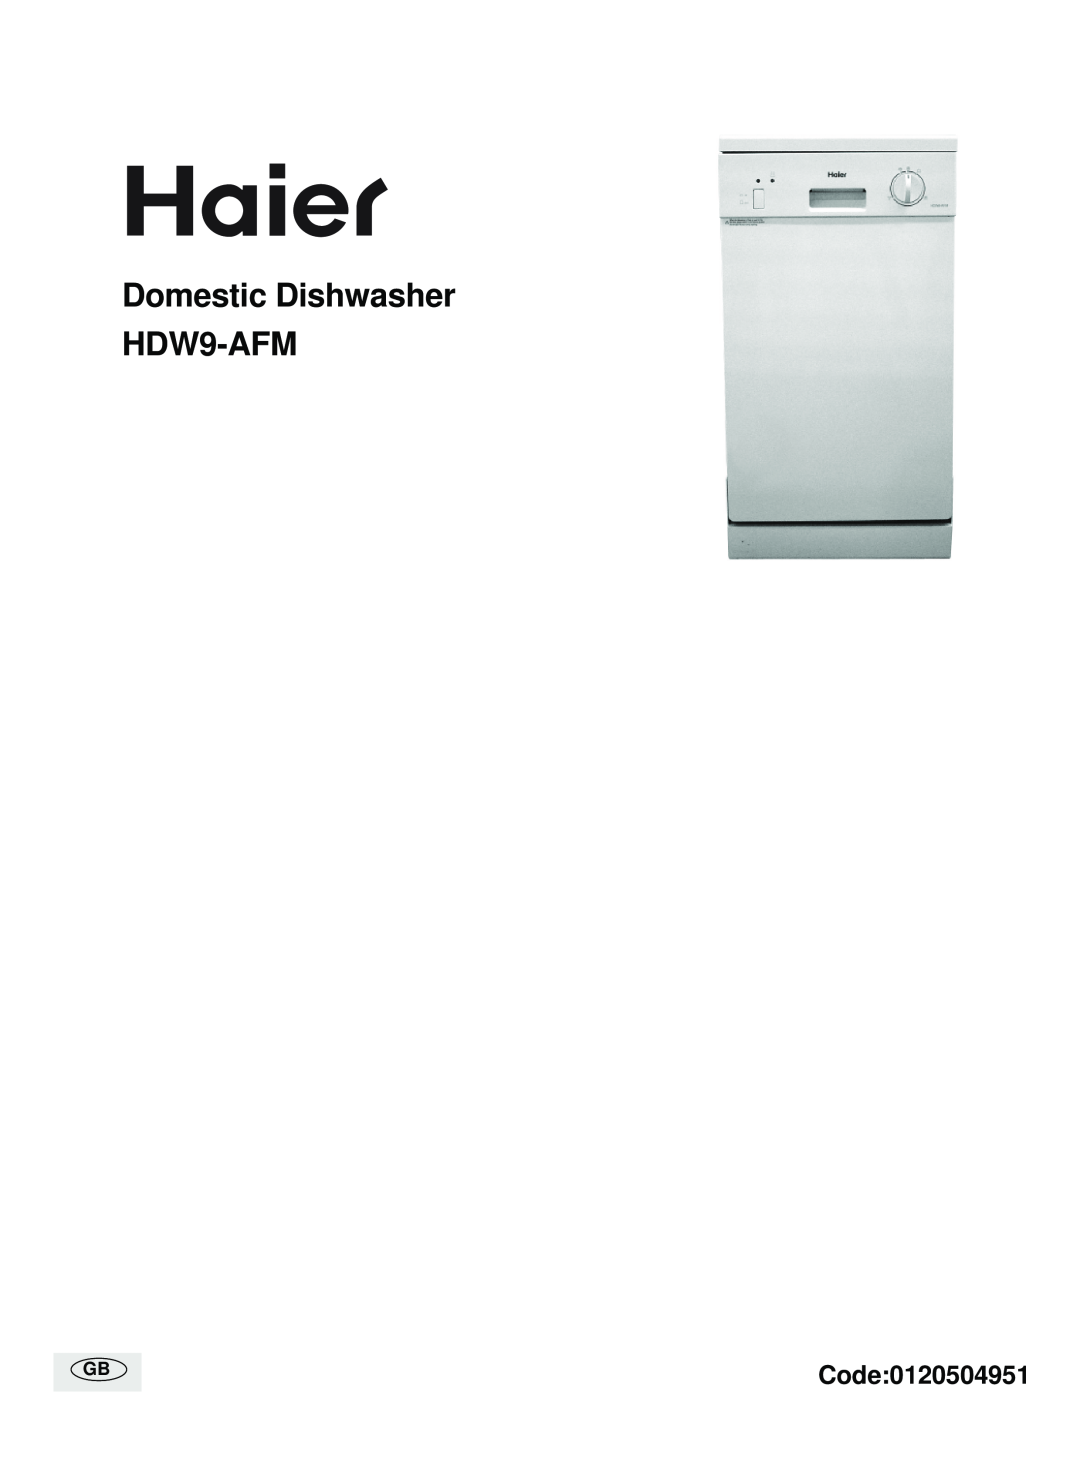 Haier manual Domestic Dishwasher HDW9-AFM, Code0120504951 